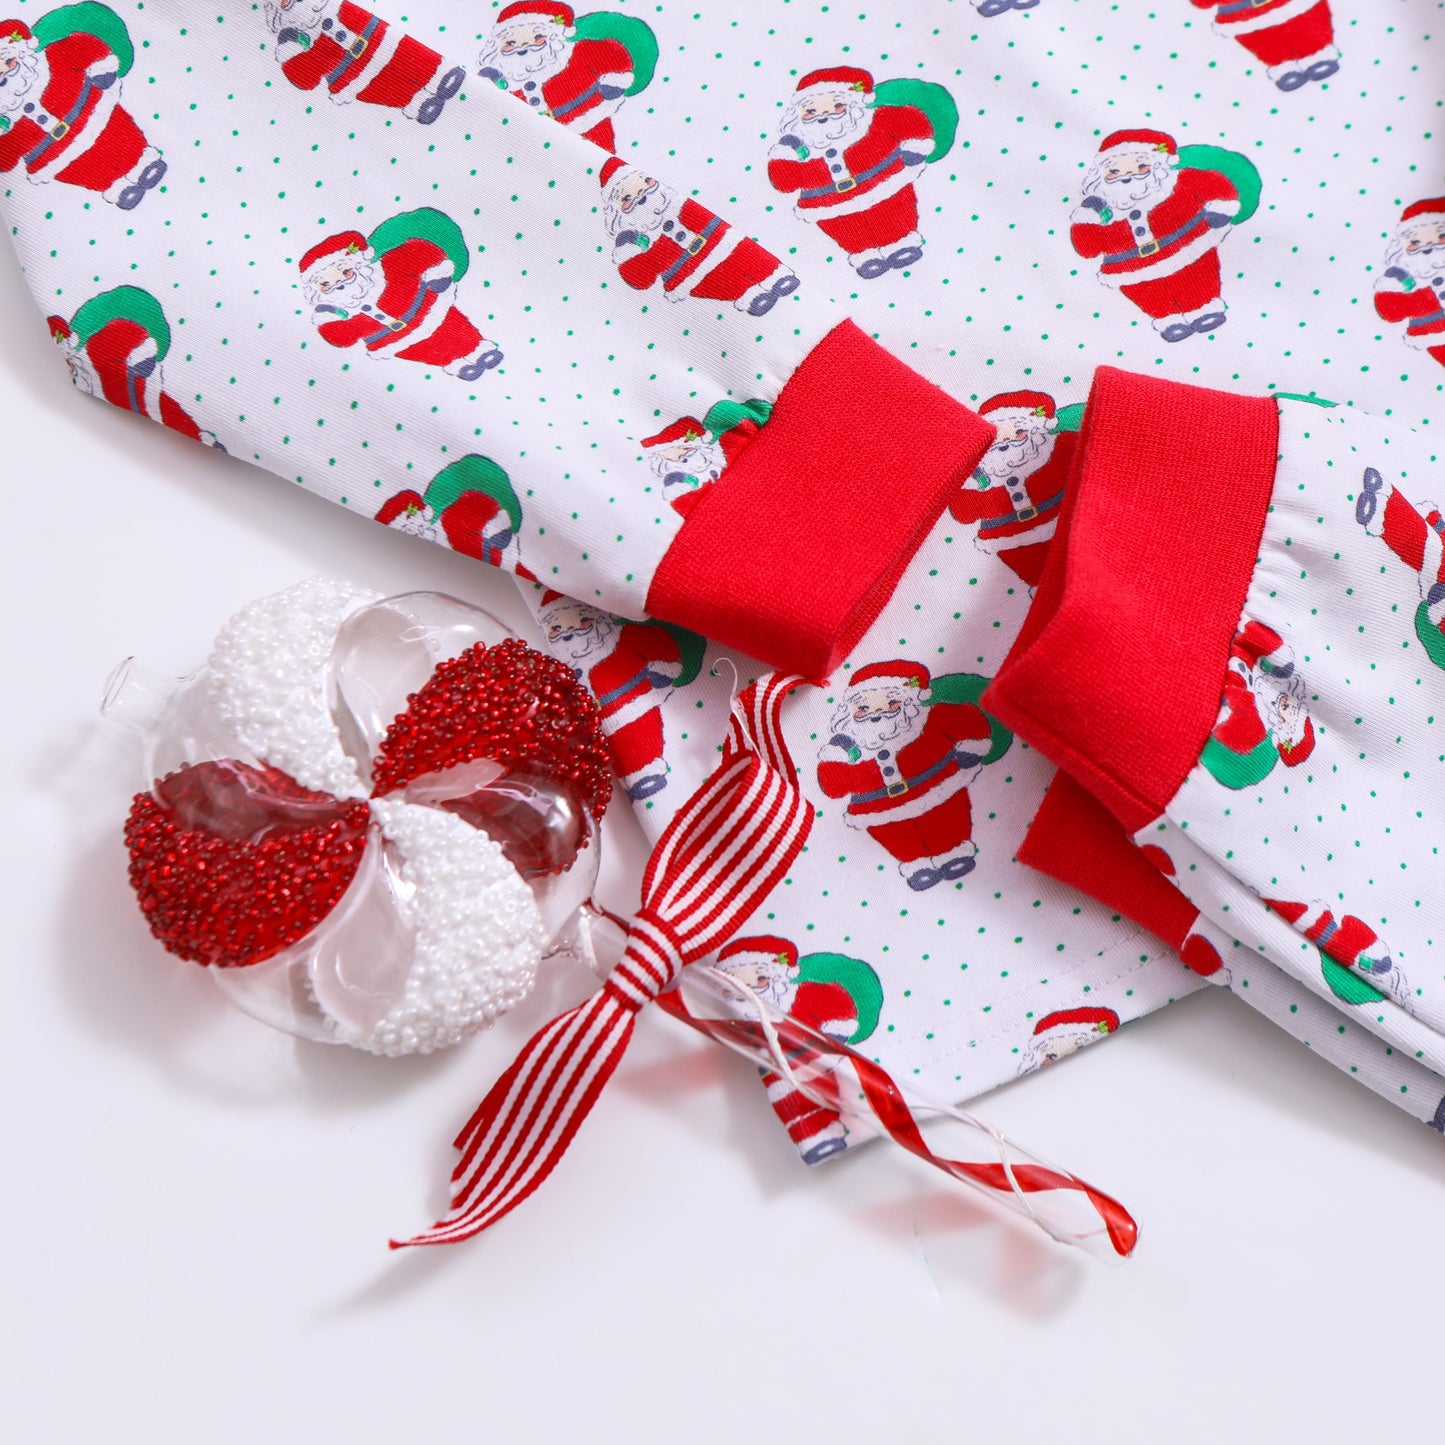 Abigail Santa Print Christmas Pajamas for Girls - Jellybean by Smock Candy